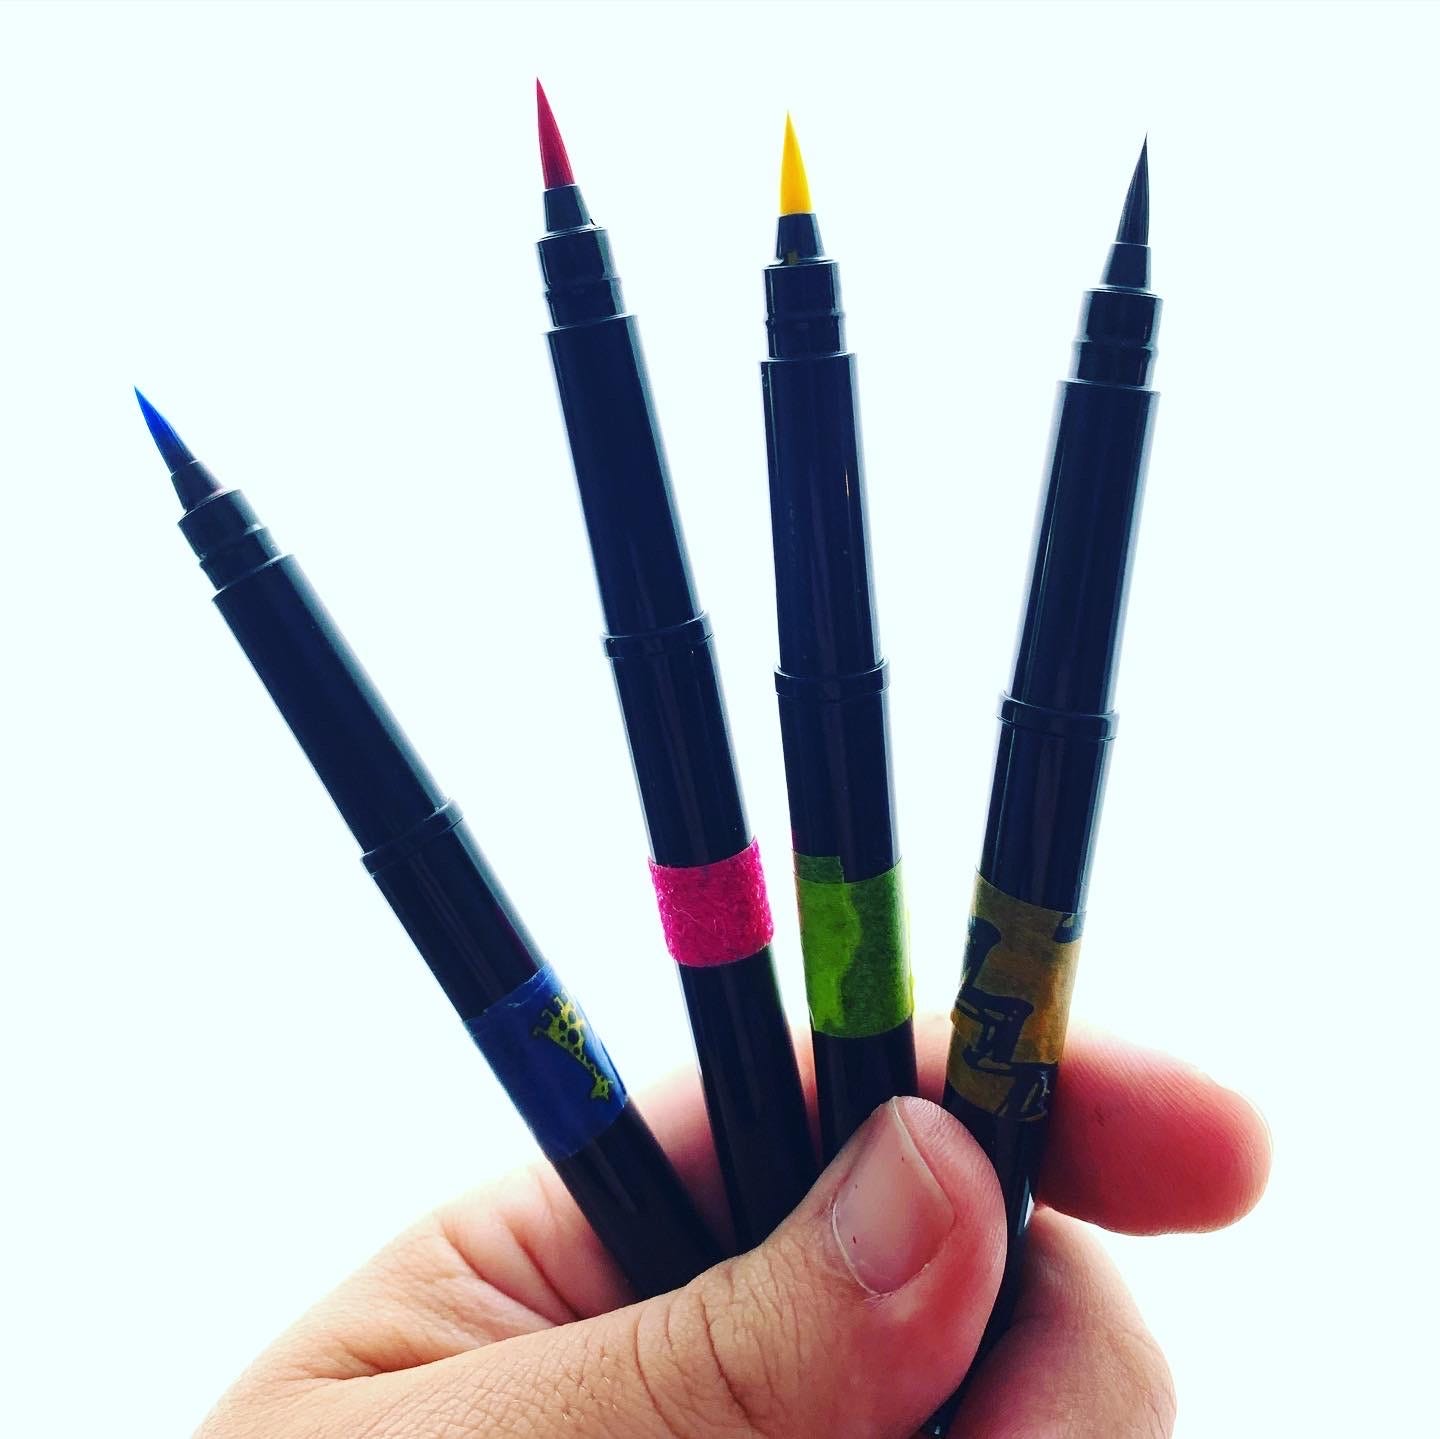 How I make color brush pens - Austin Kleon